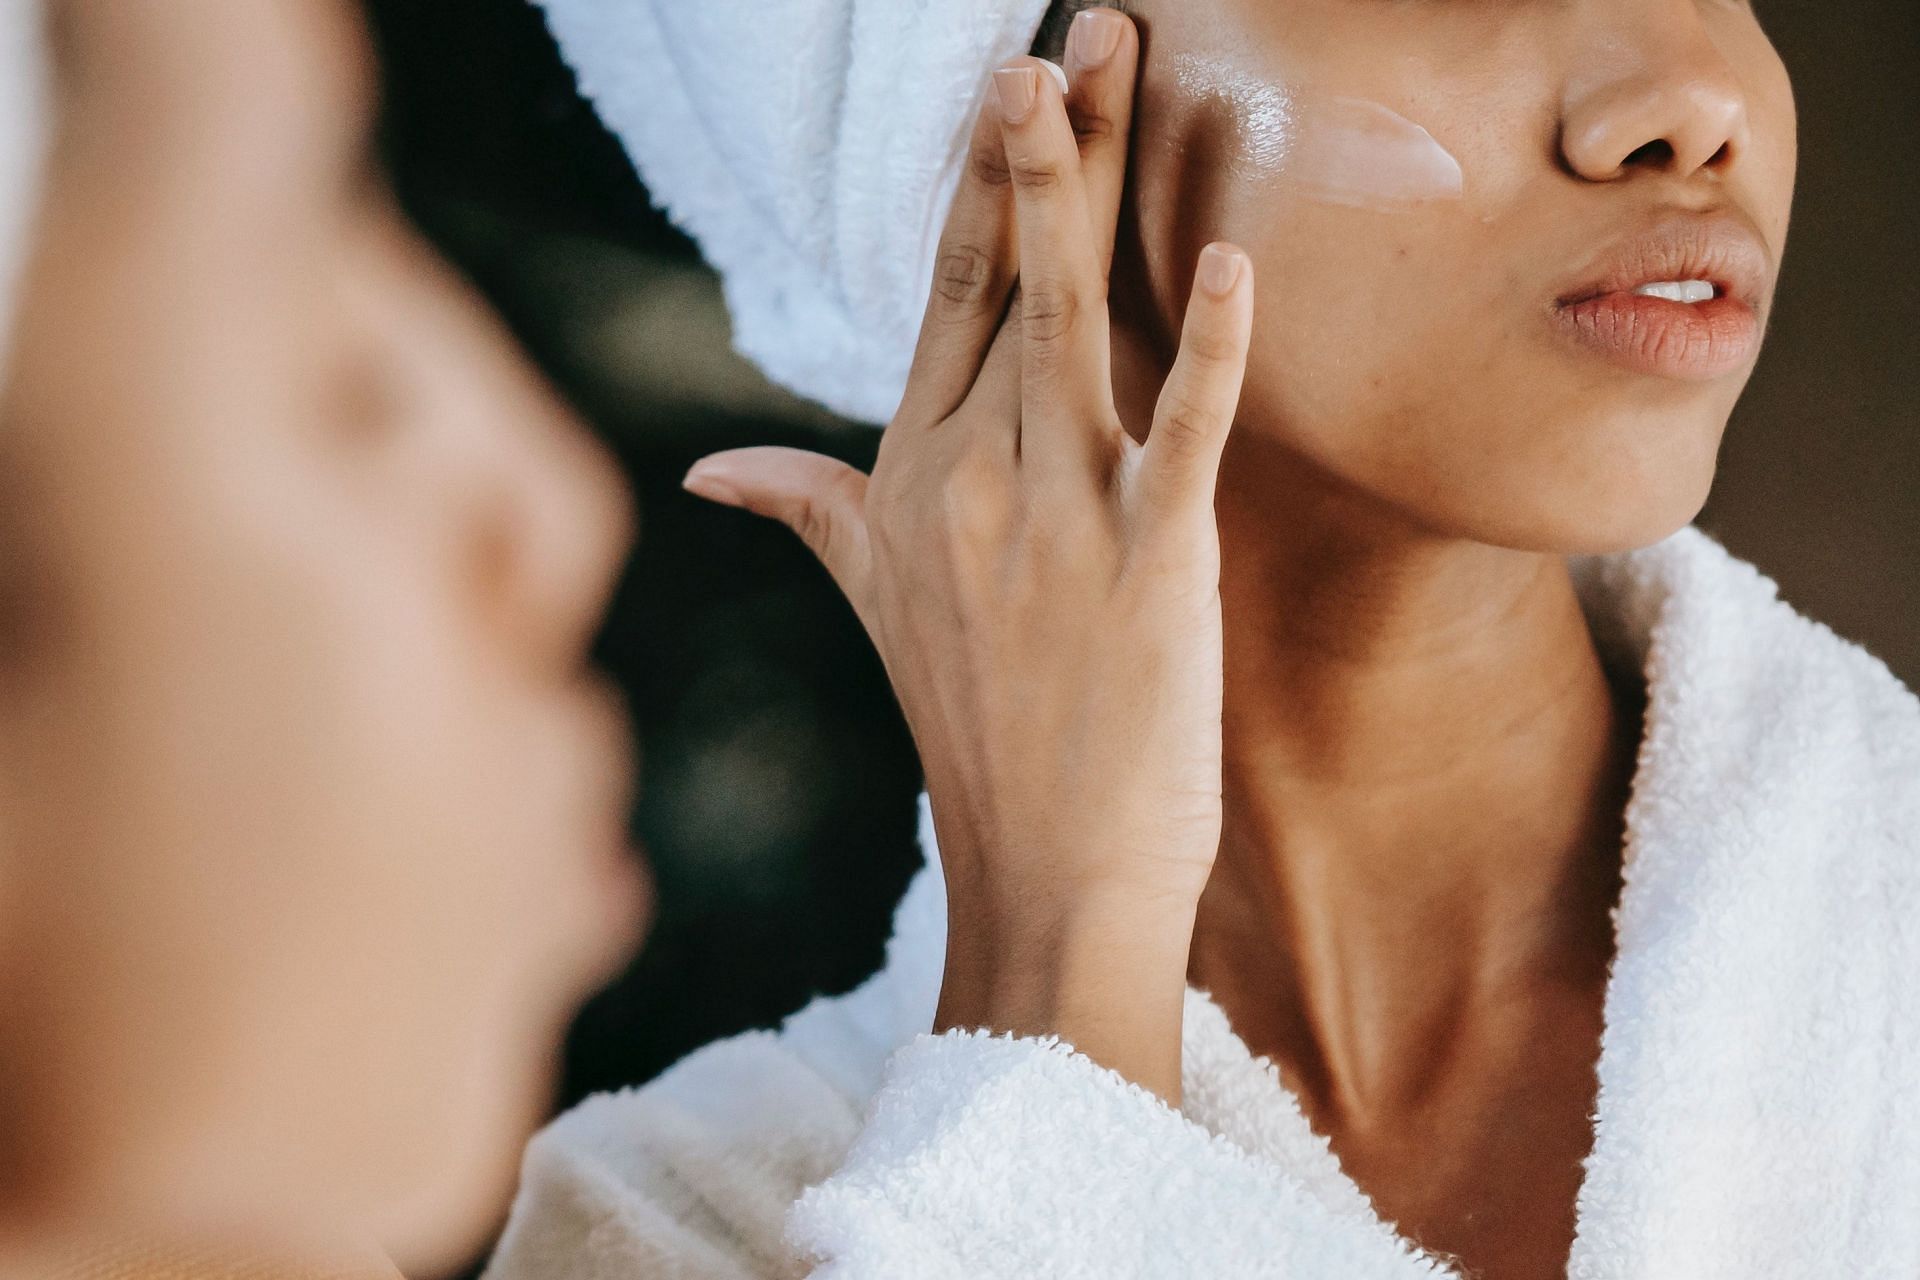 Skin moisturizing is essential to keeping it healthy. (Image via Pexels/Shimazaki)